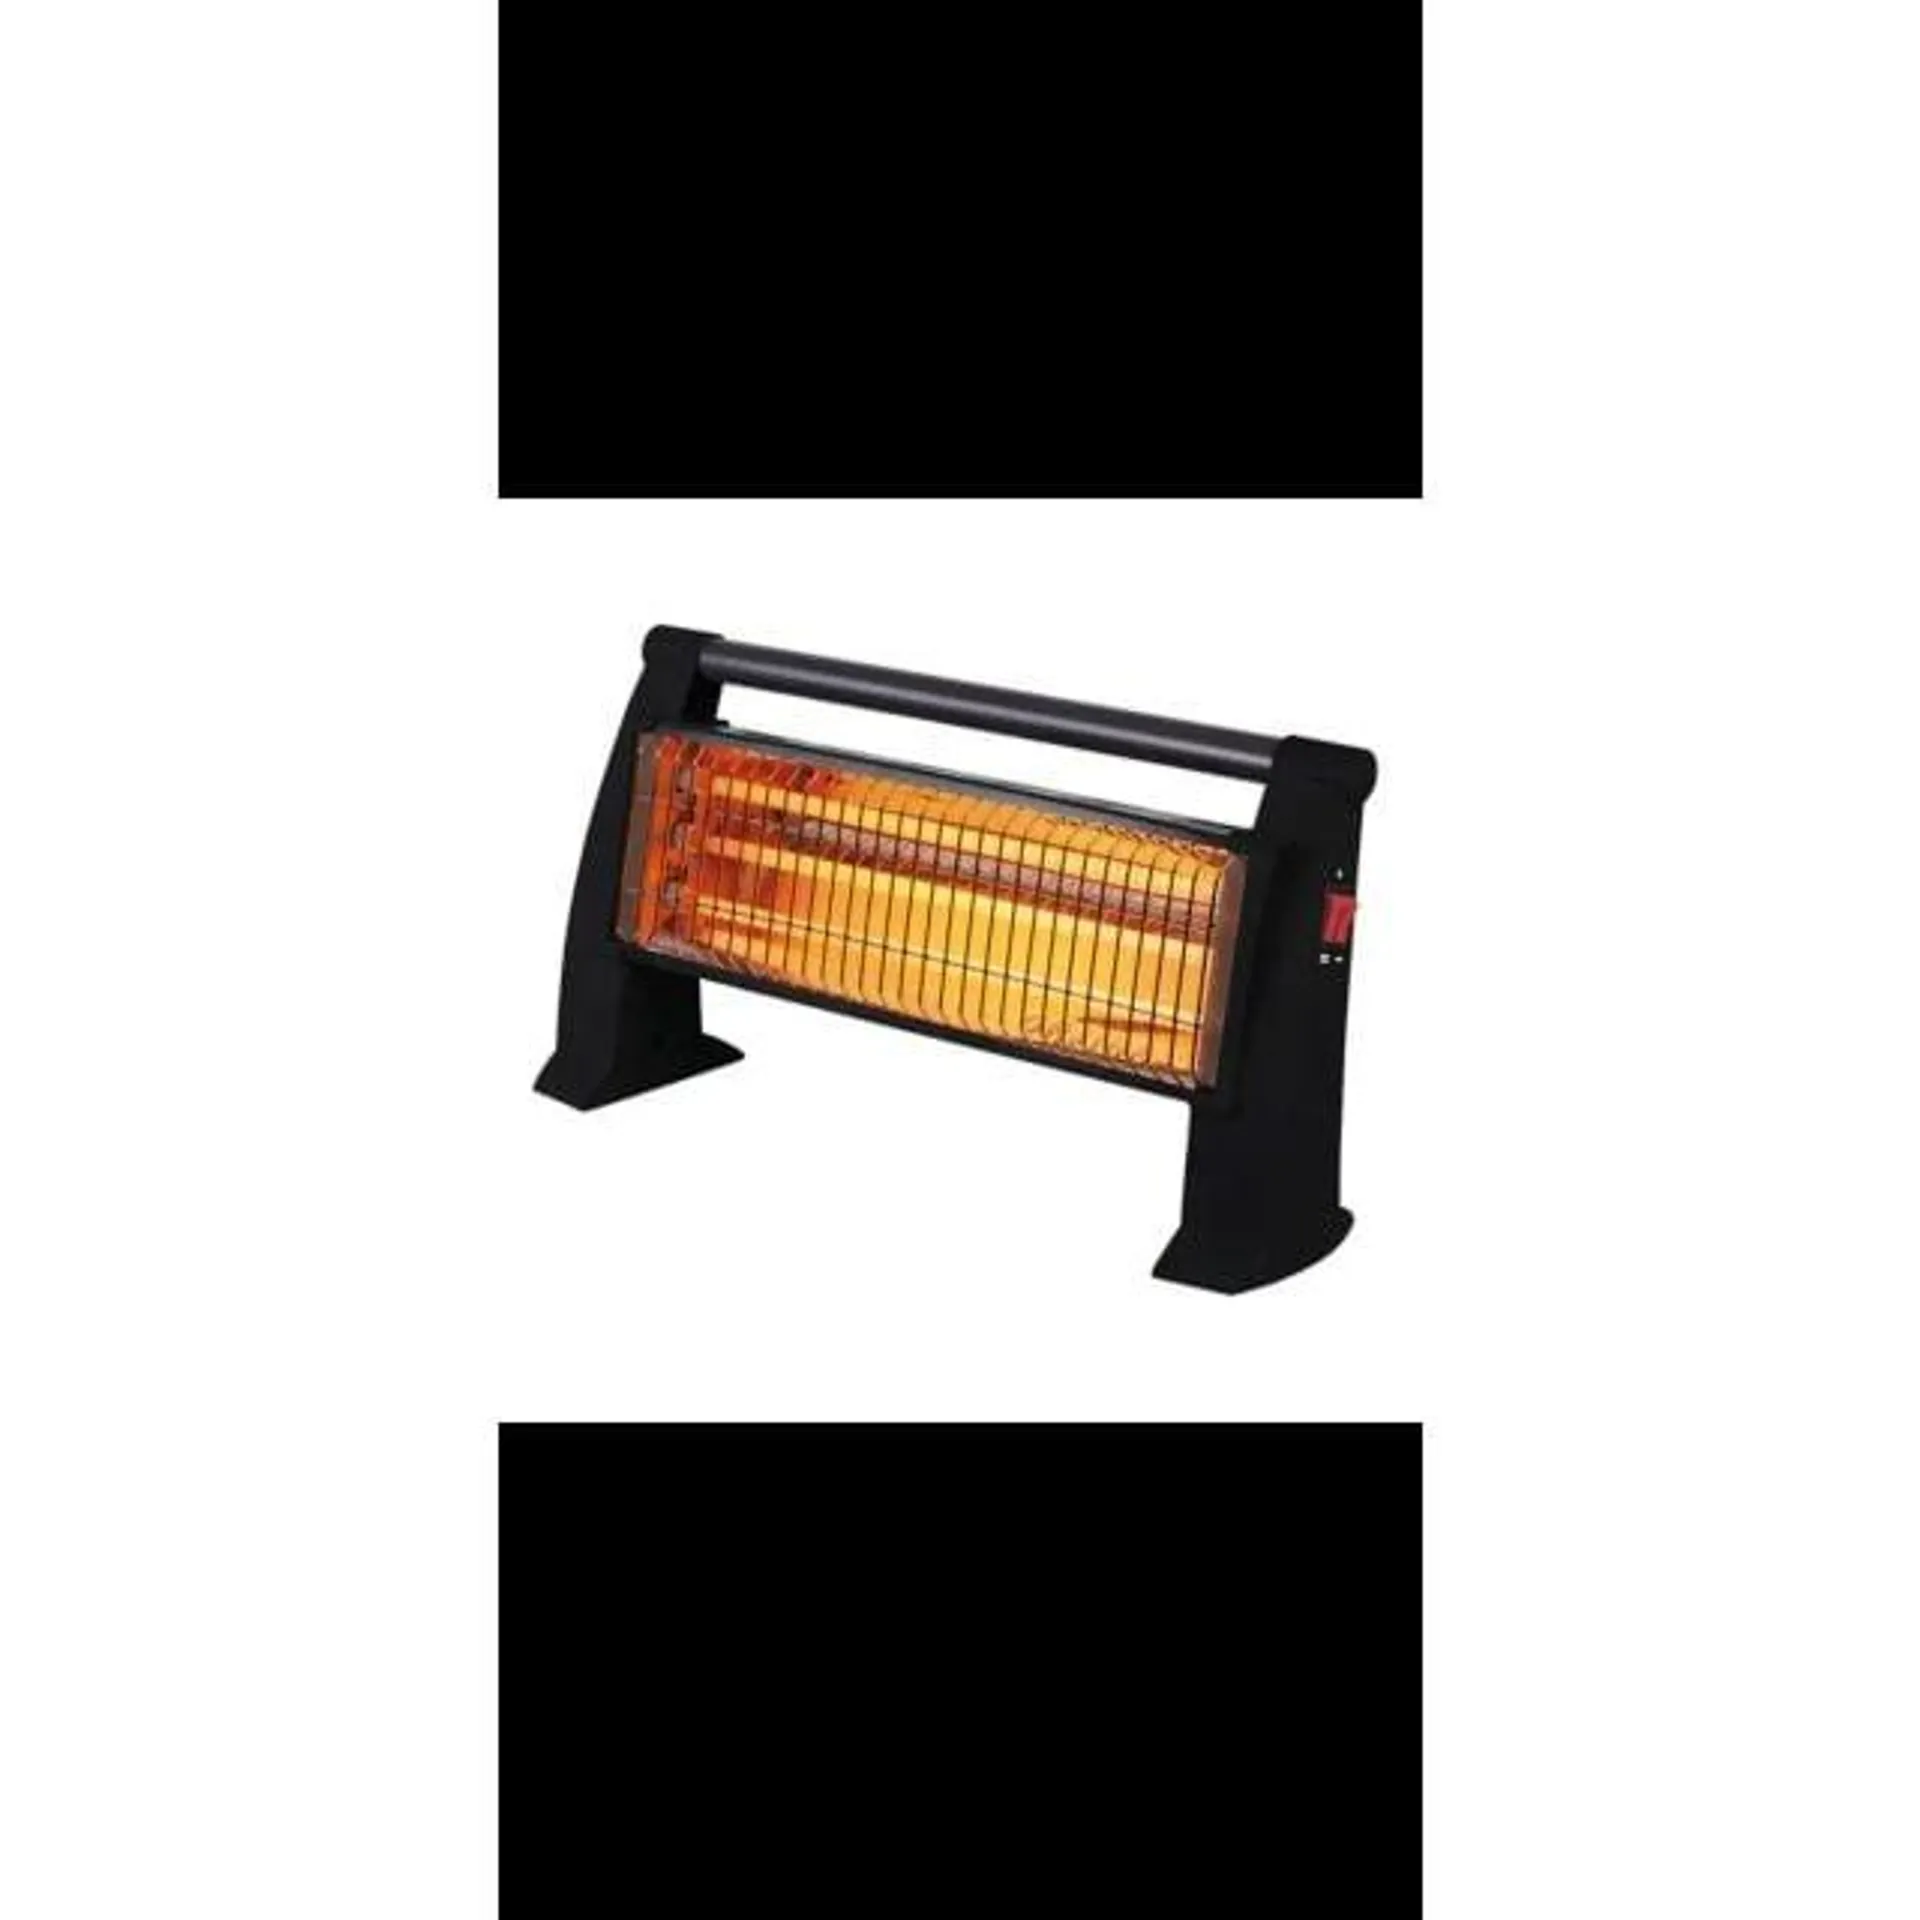 Luxell 3 Bar Heater